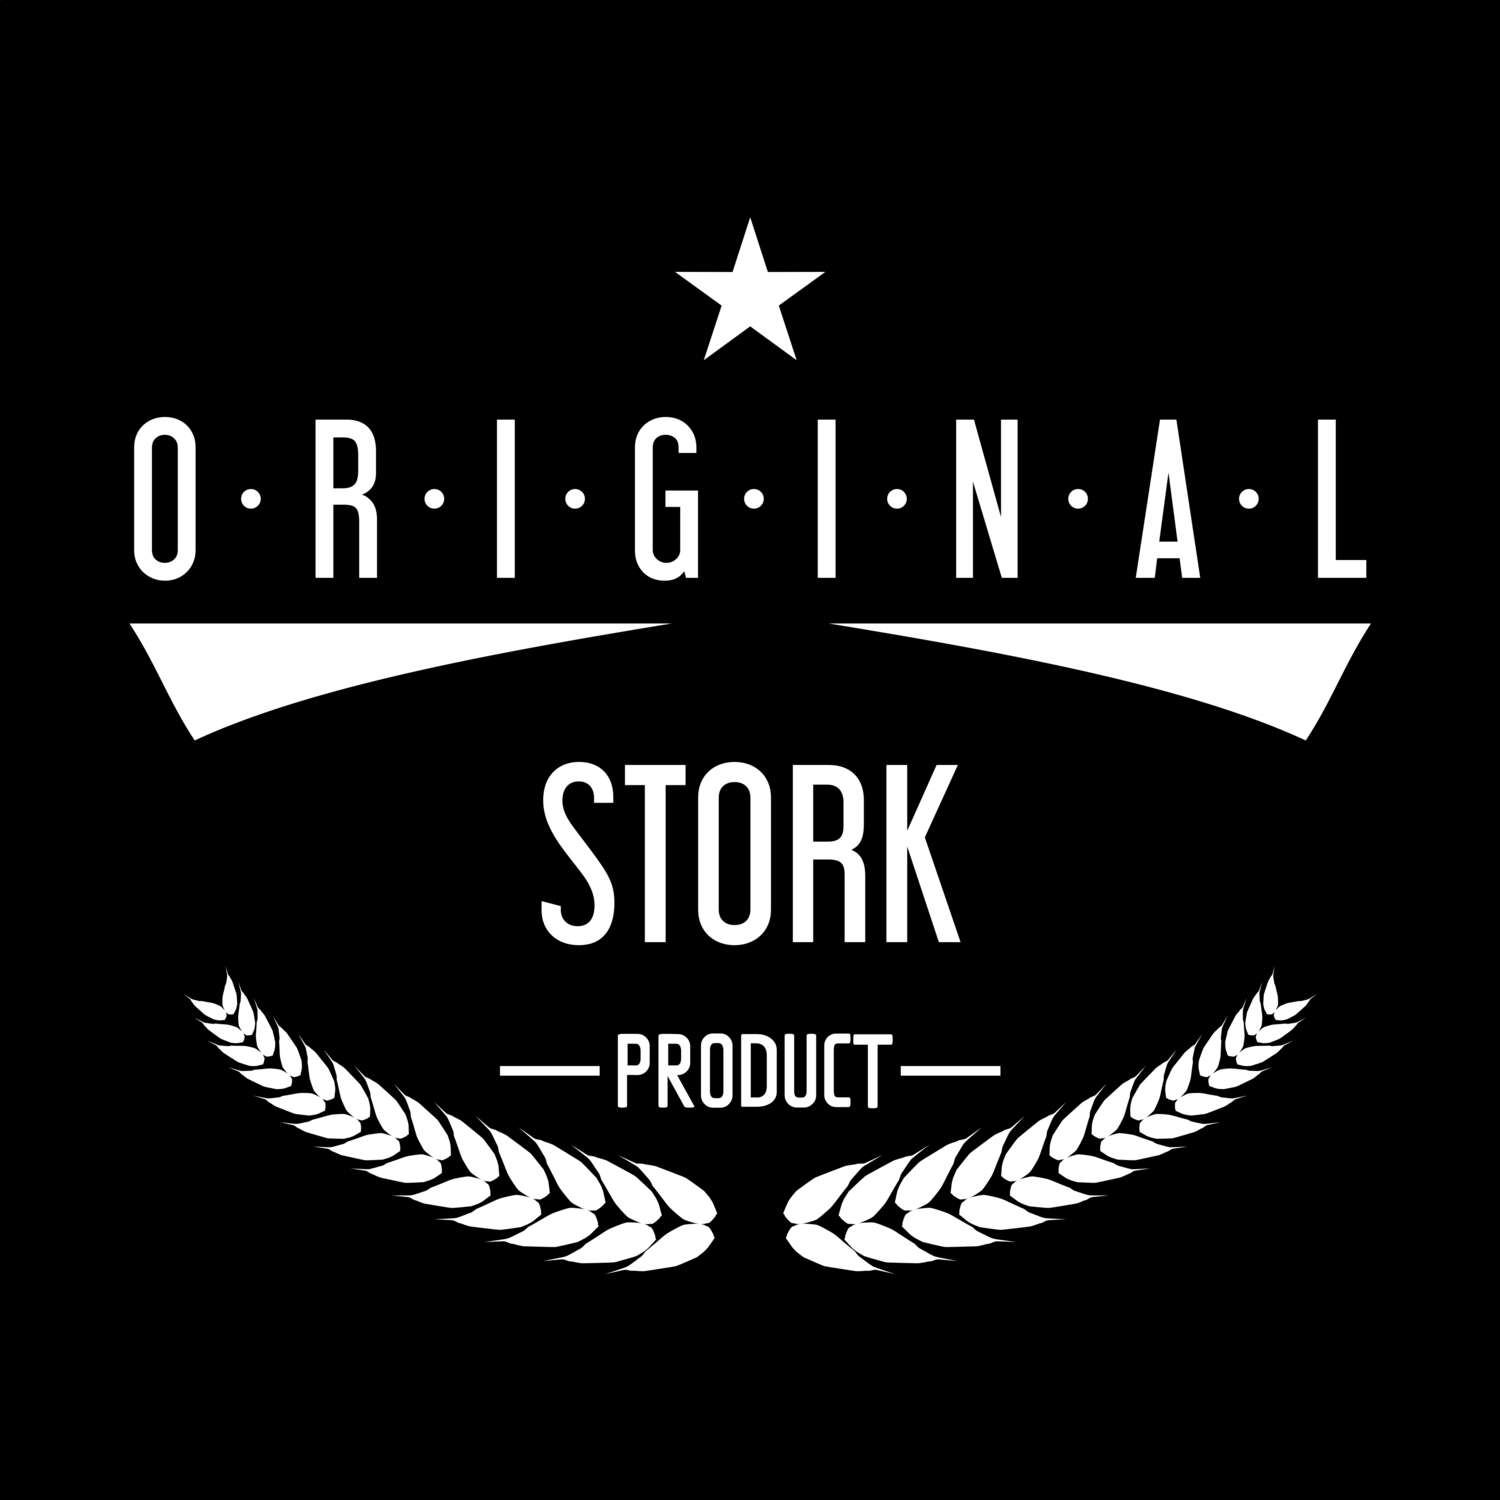 Stork T-Shirt »Original Product«